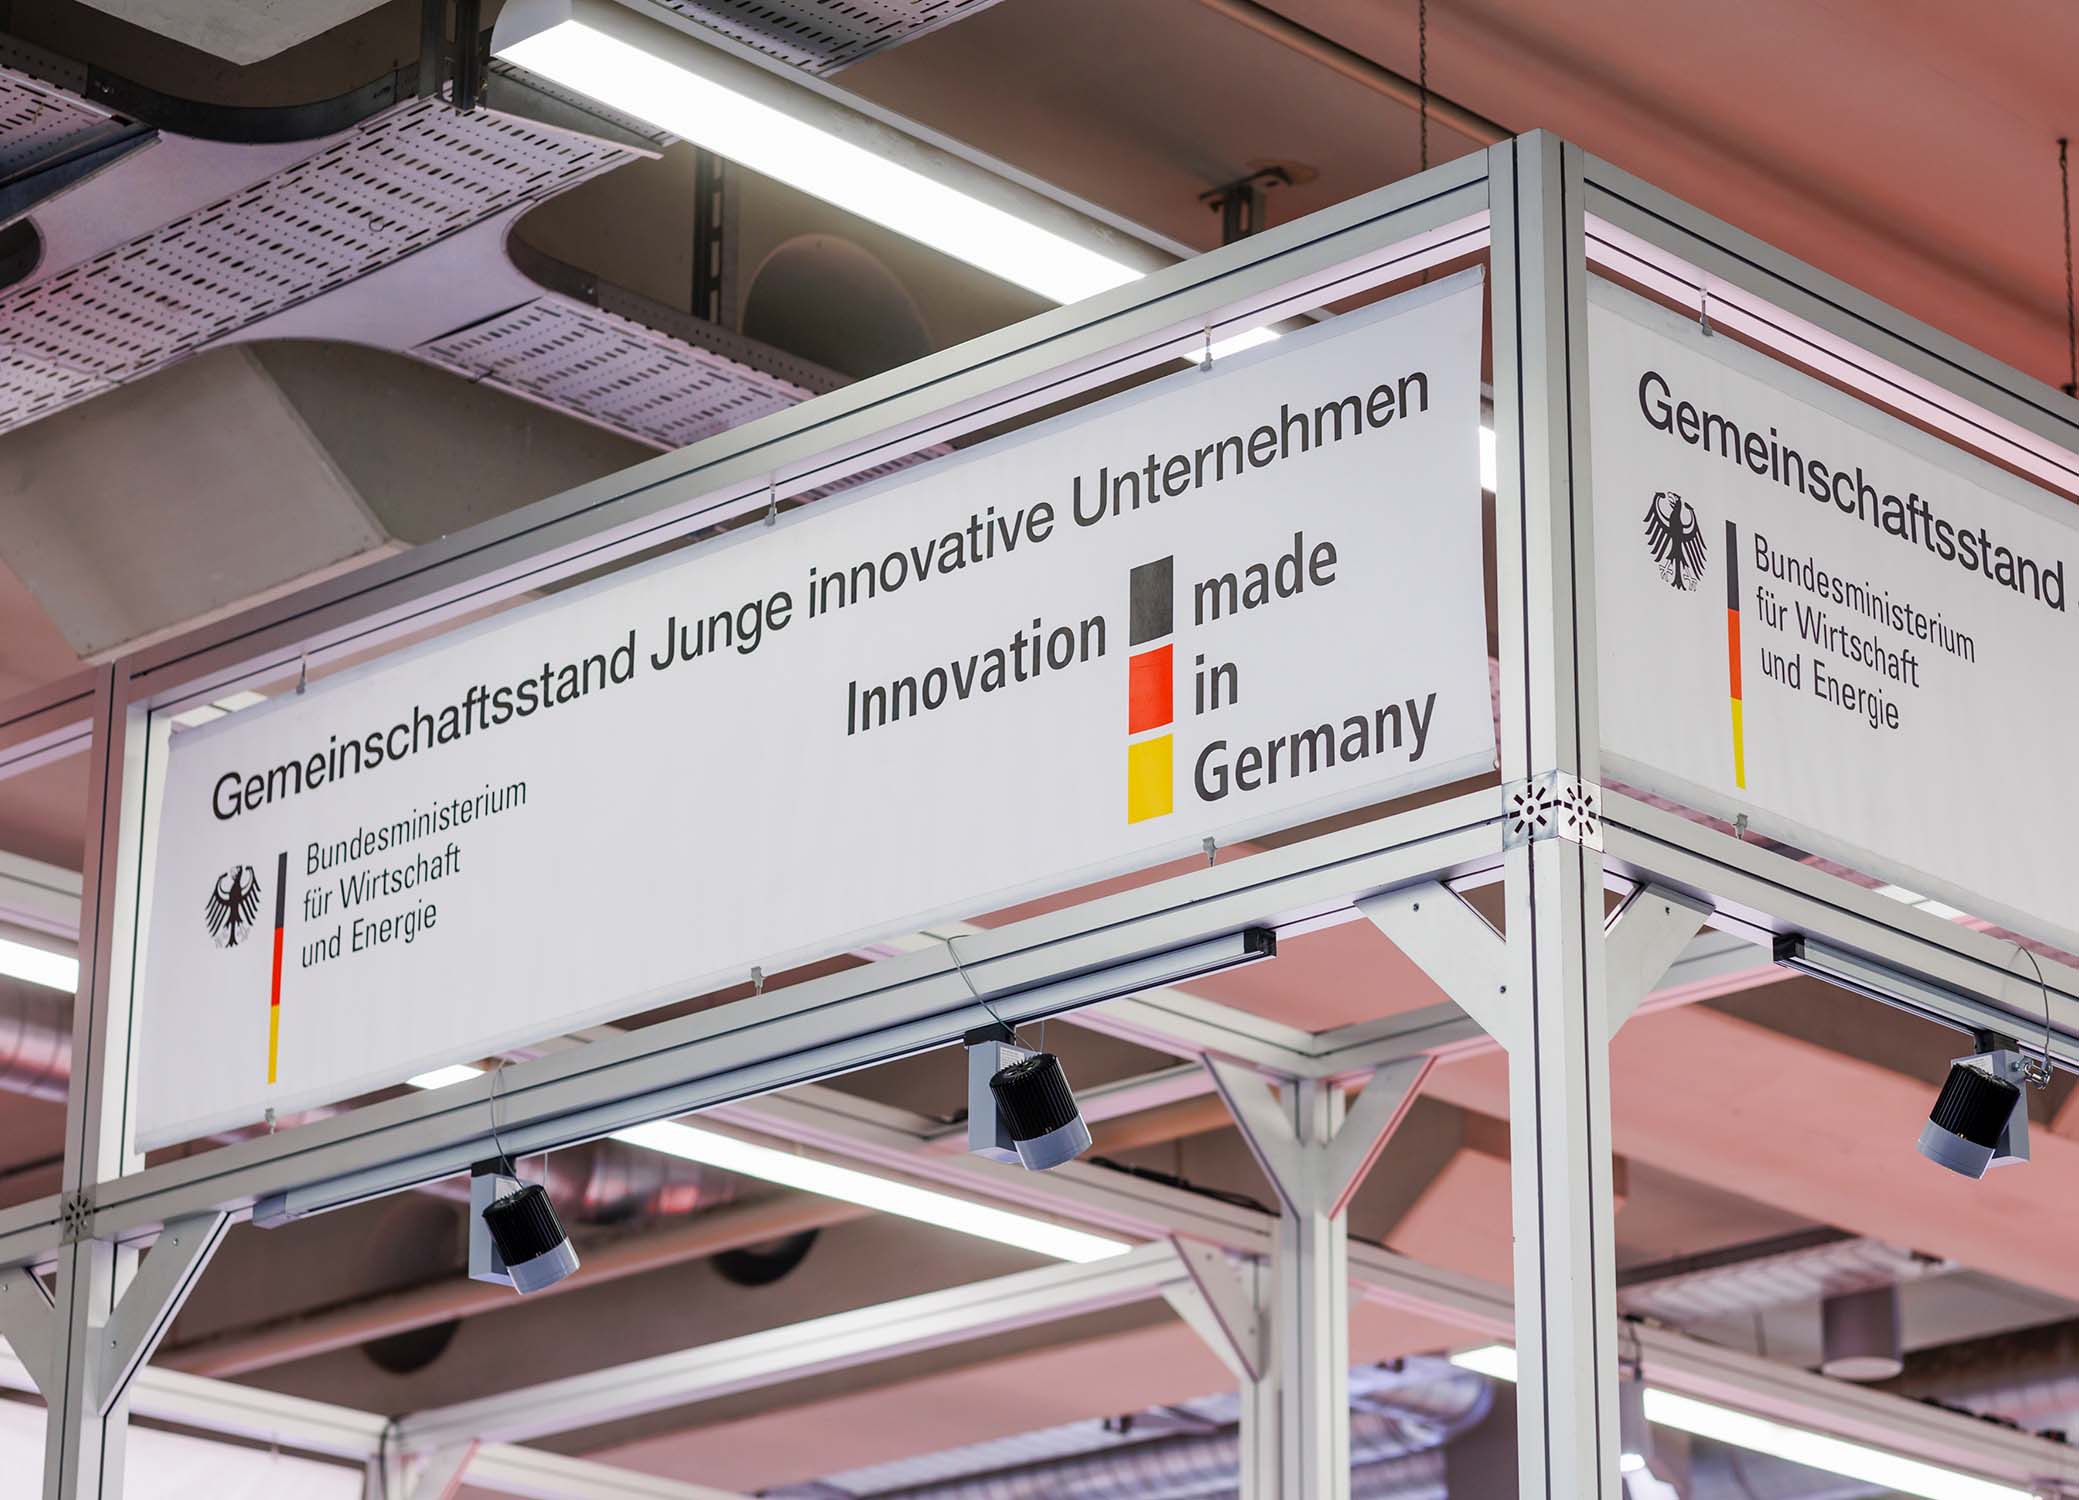 Pavillion „Innovation made in Germany“